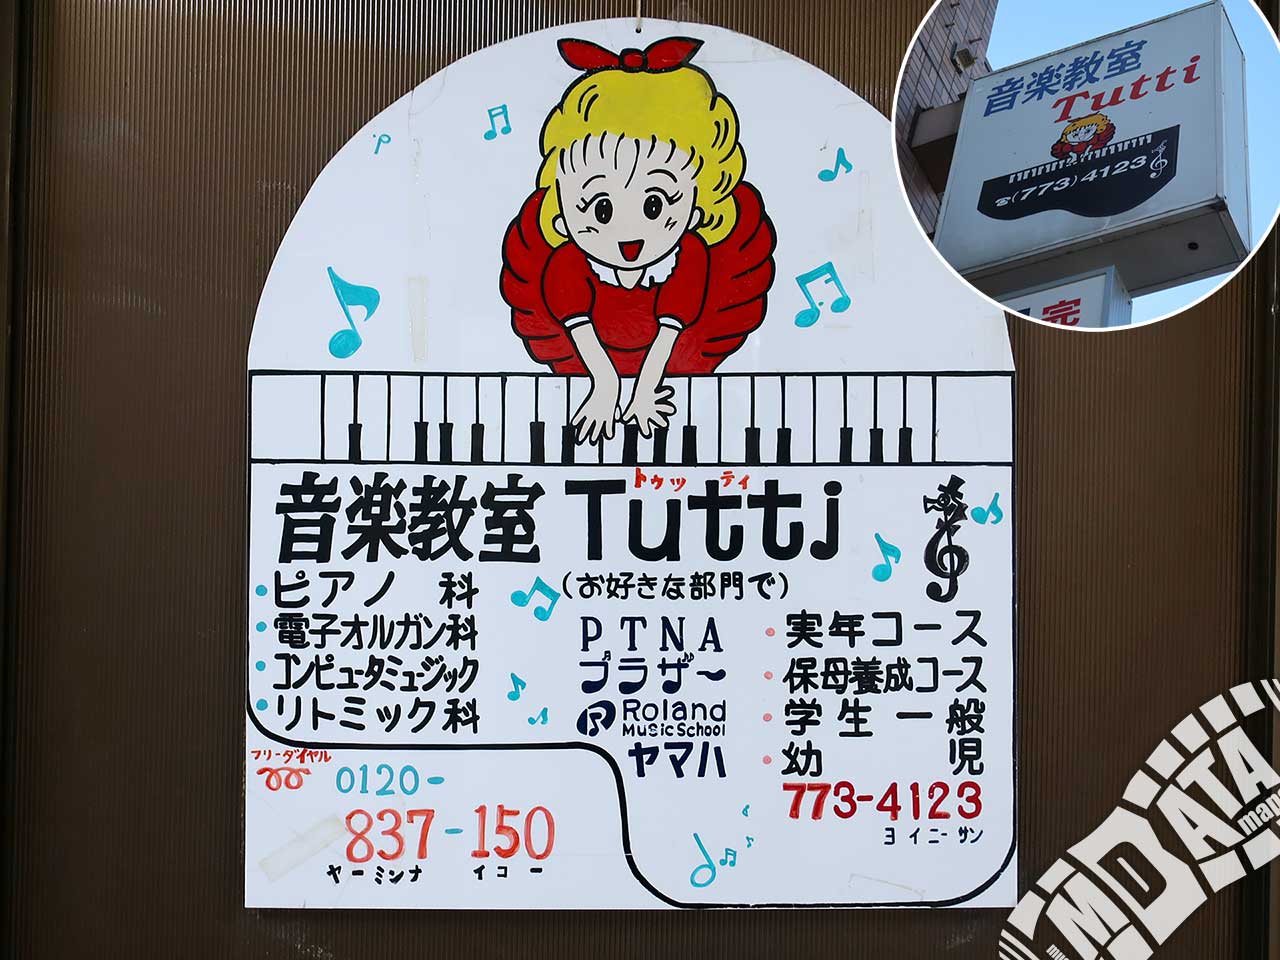 音楽教室Tuttiの写真 撮影日:2019/11/21 Photo taken on 2019/11/21